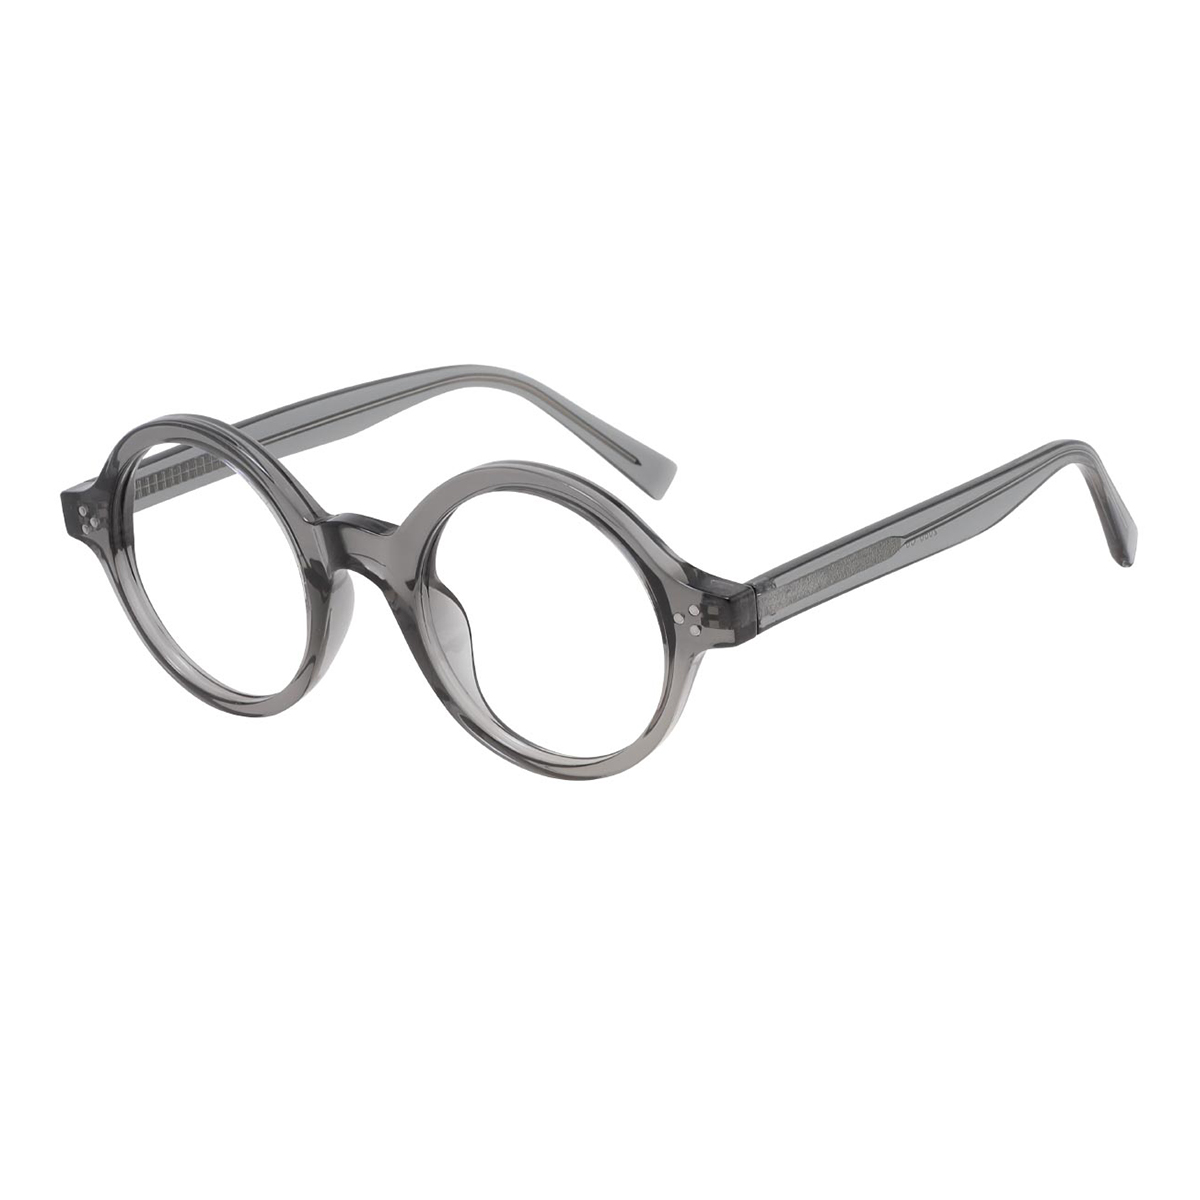 Ariston - Round Gray Reading Glasses for Men & Women